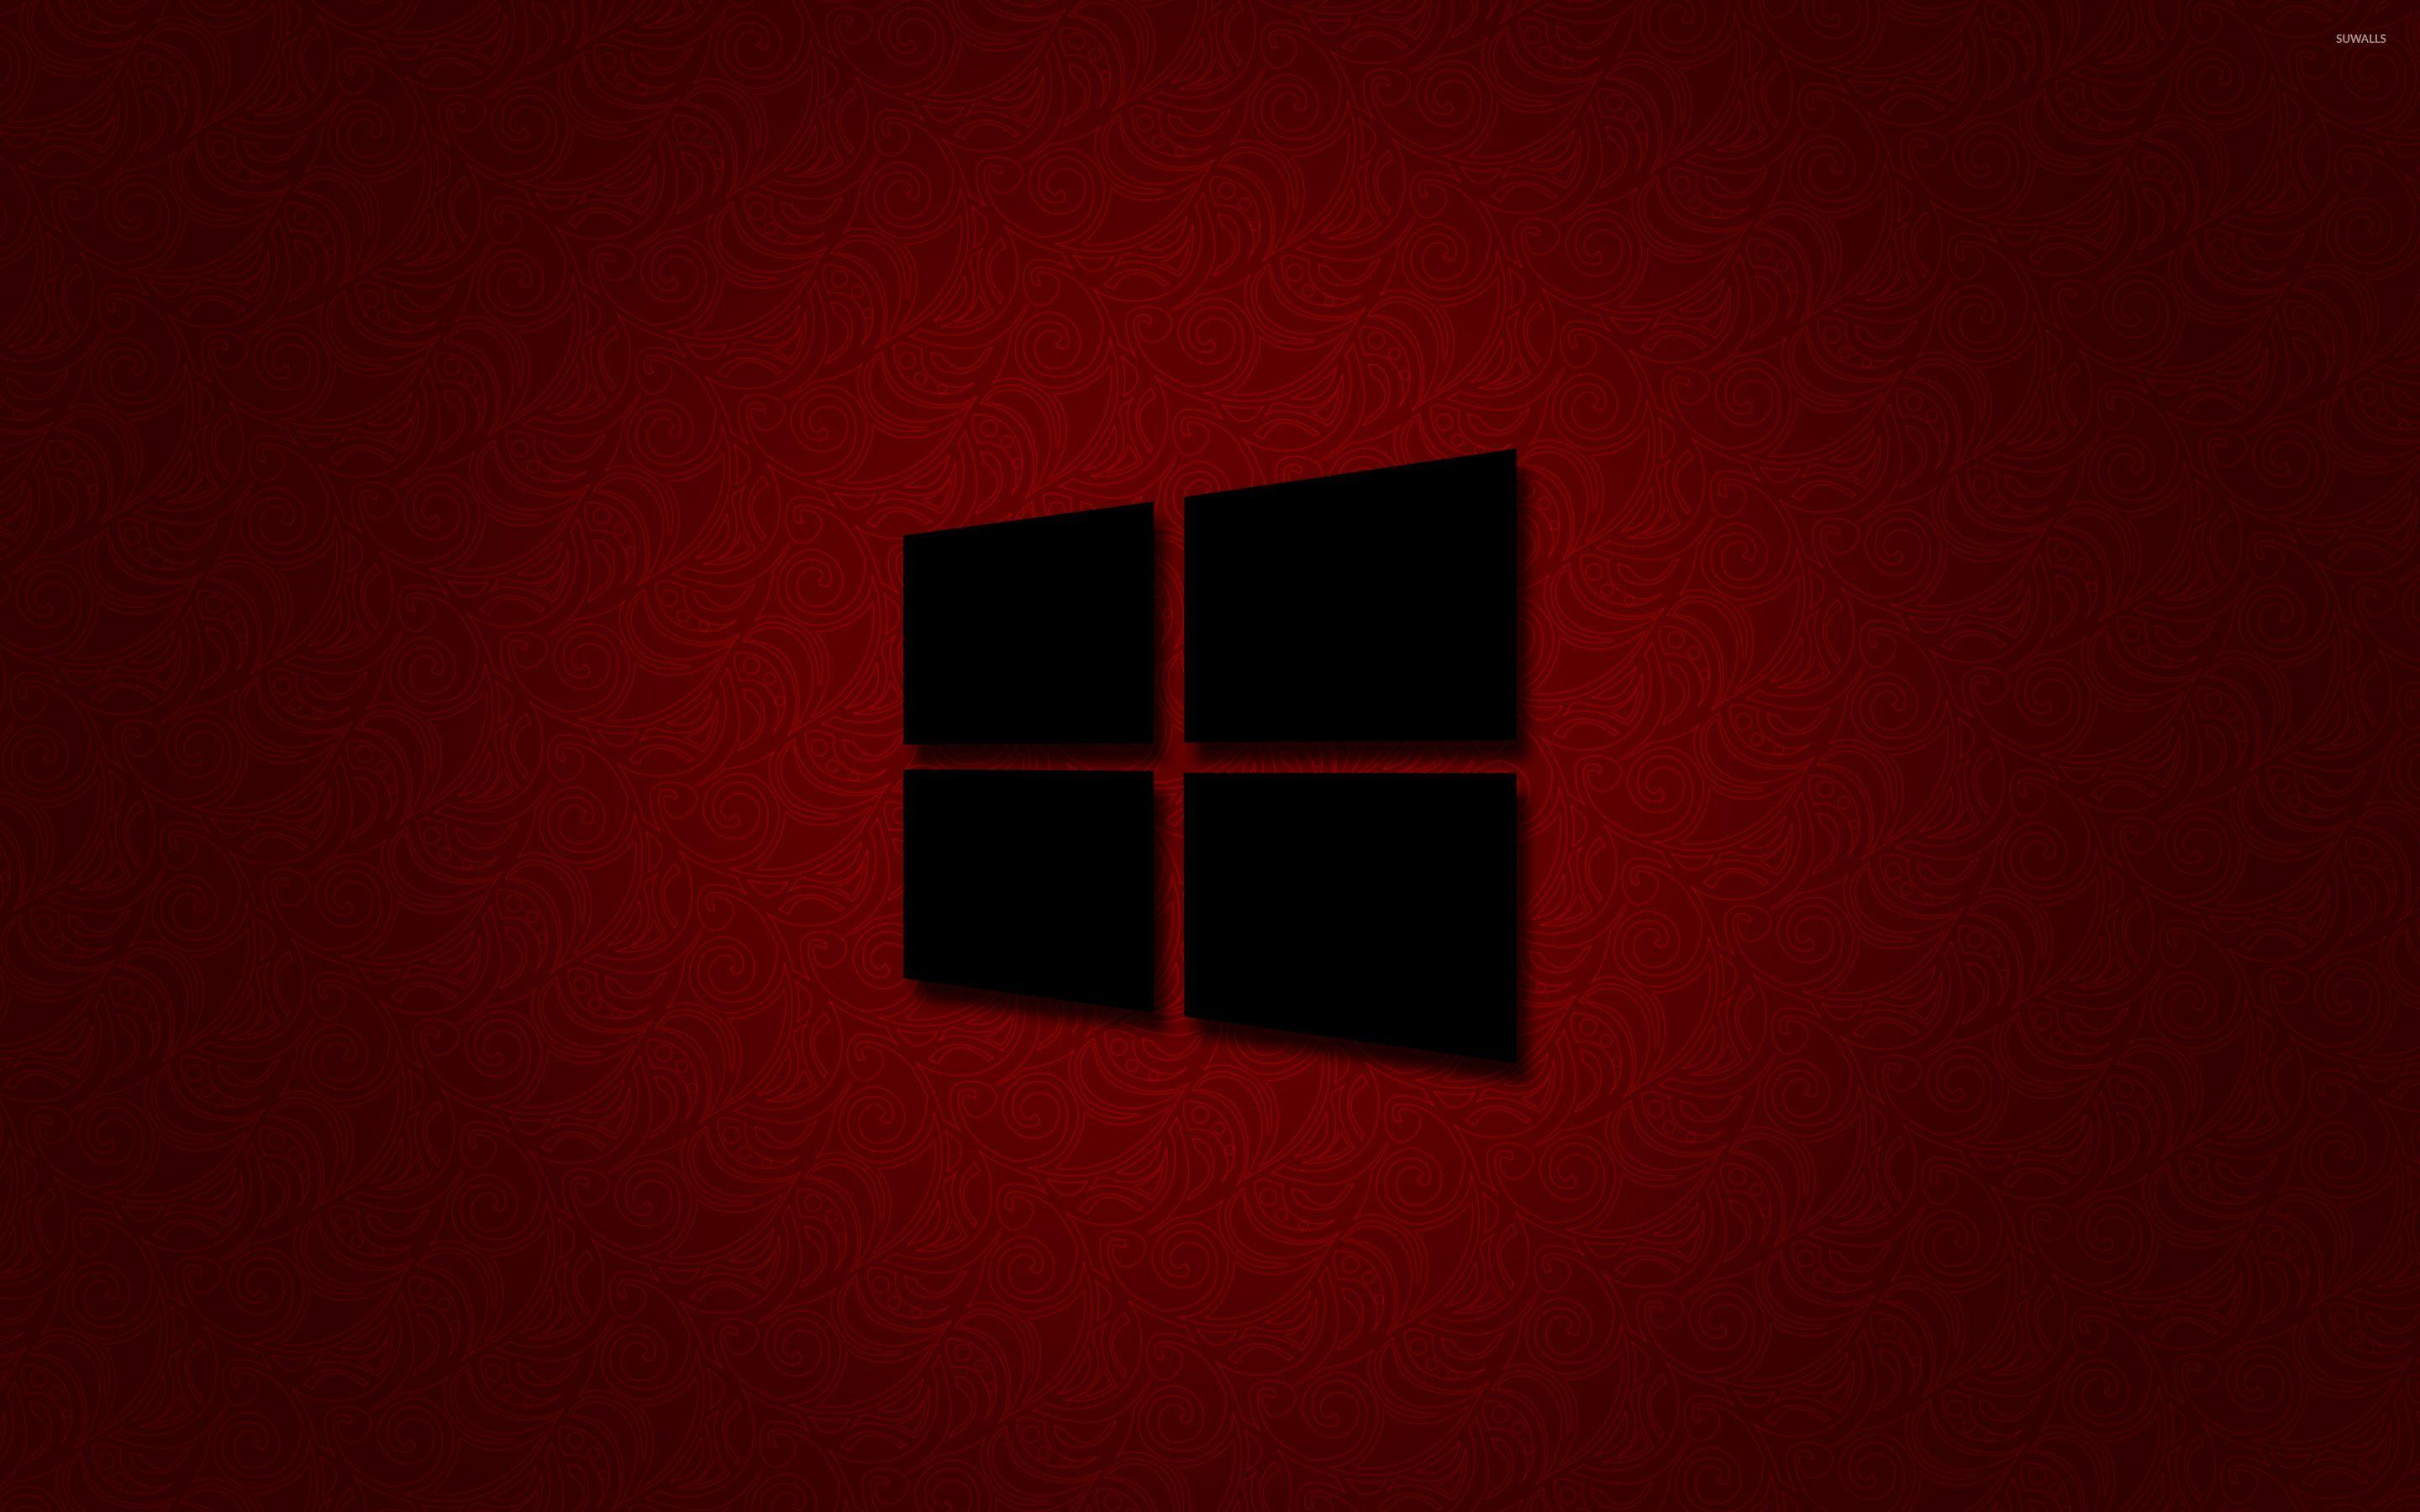 Black Windows Red Logo - Windows 10 black logo on red wallpaper - Computer wallpapers - #45695